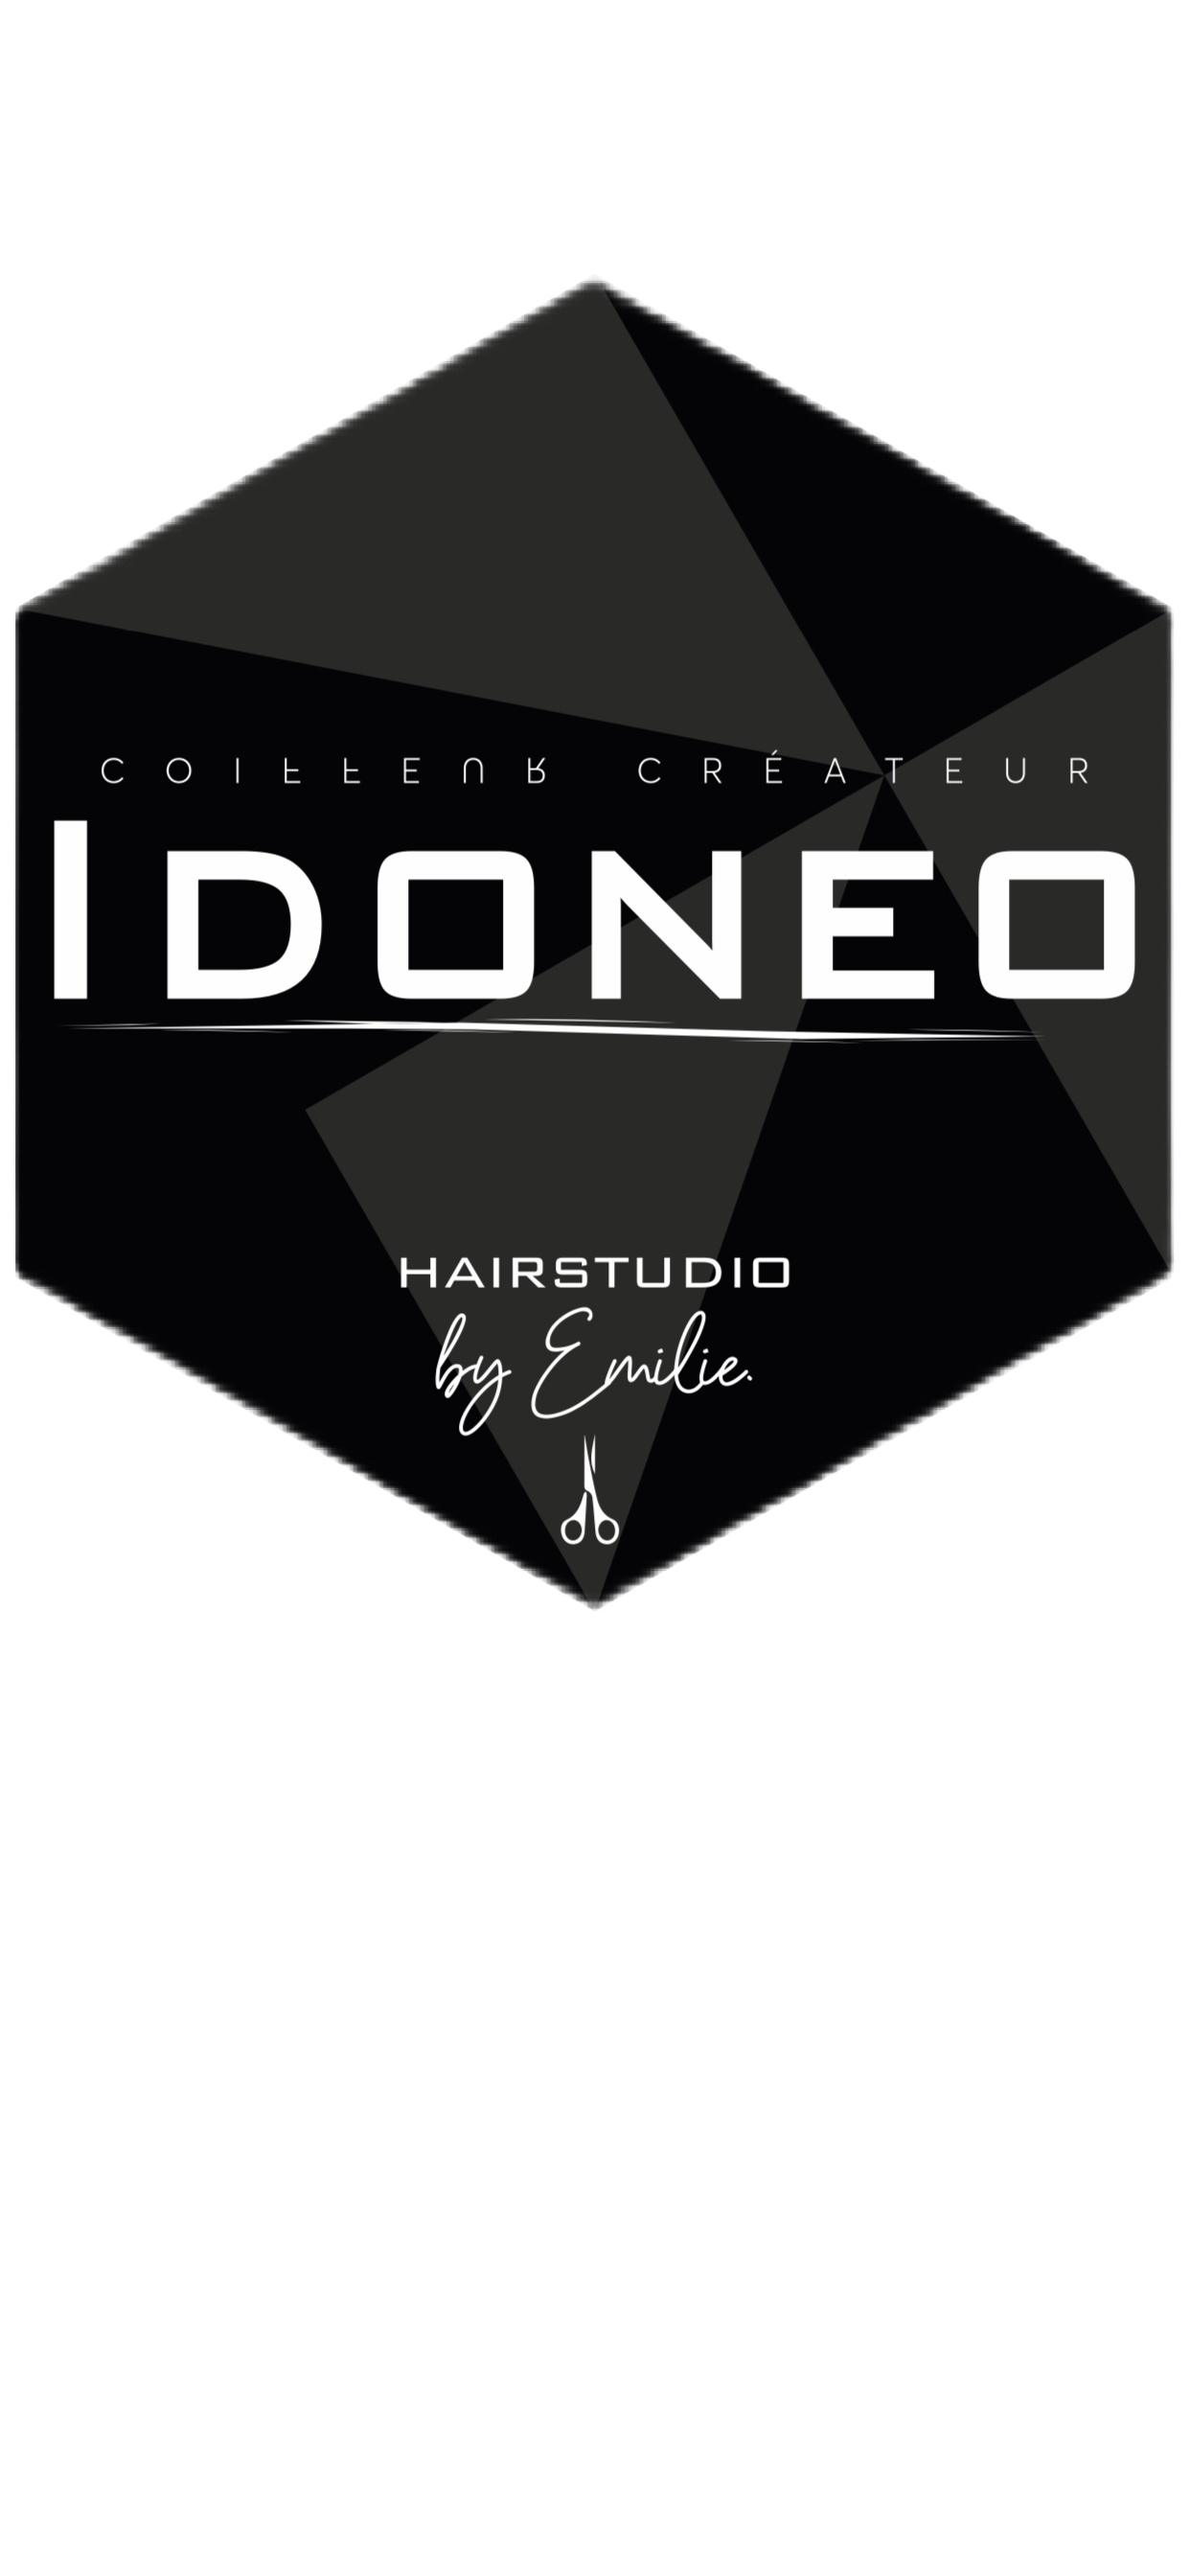 IDONEO HAIR STUDIO